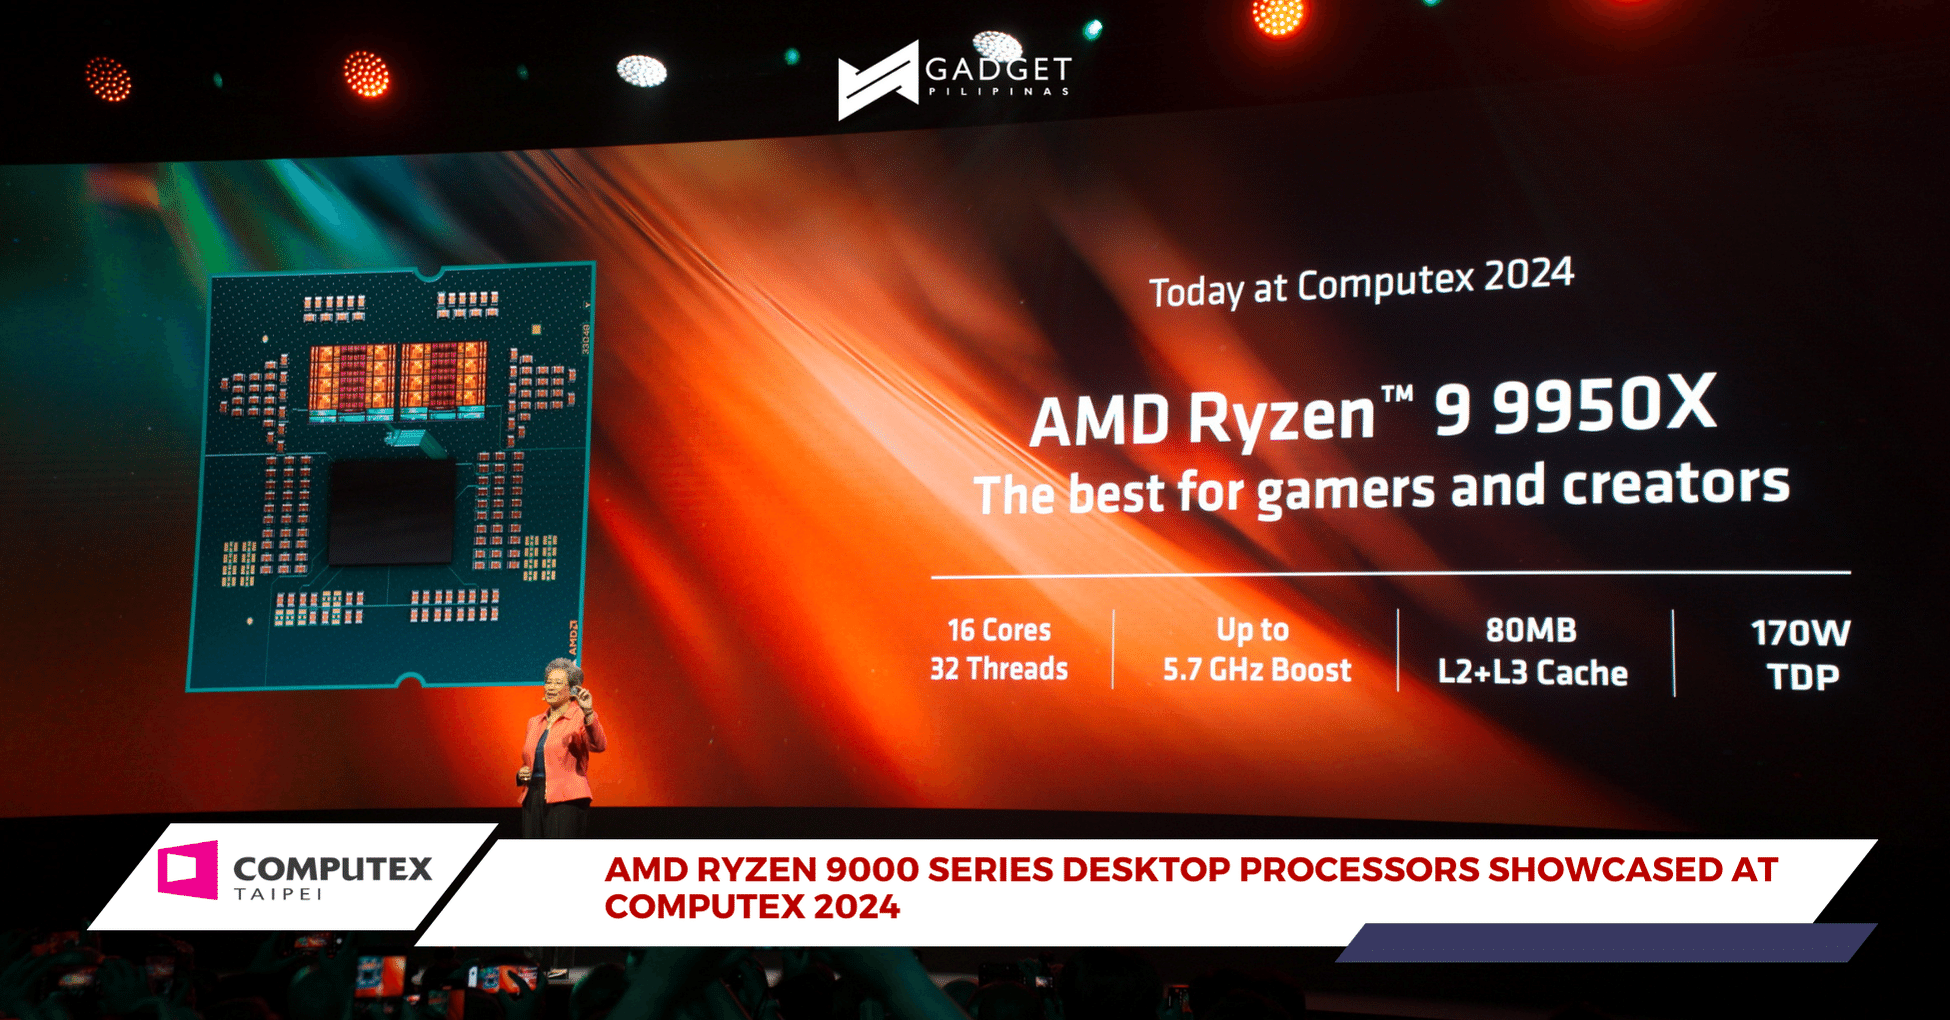 AMD Ryzen 9000 Series Desktop Processors Showcased at Computex 2024